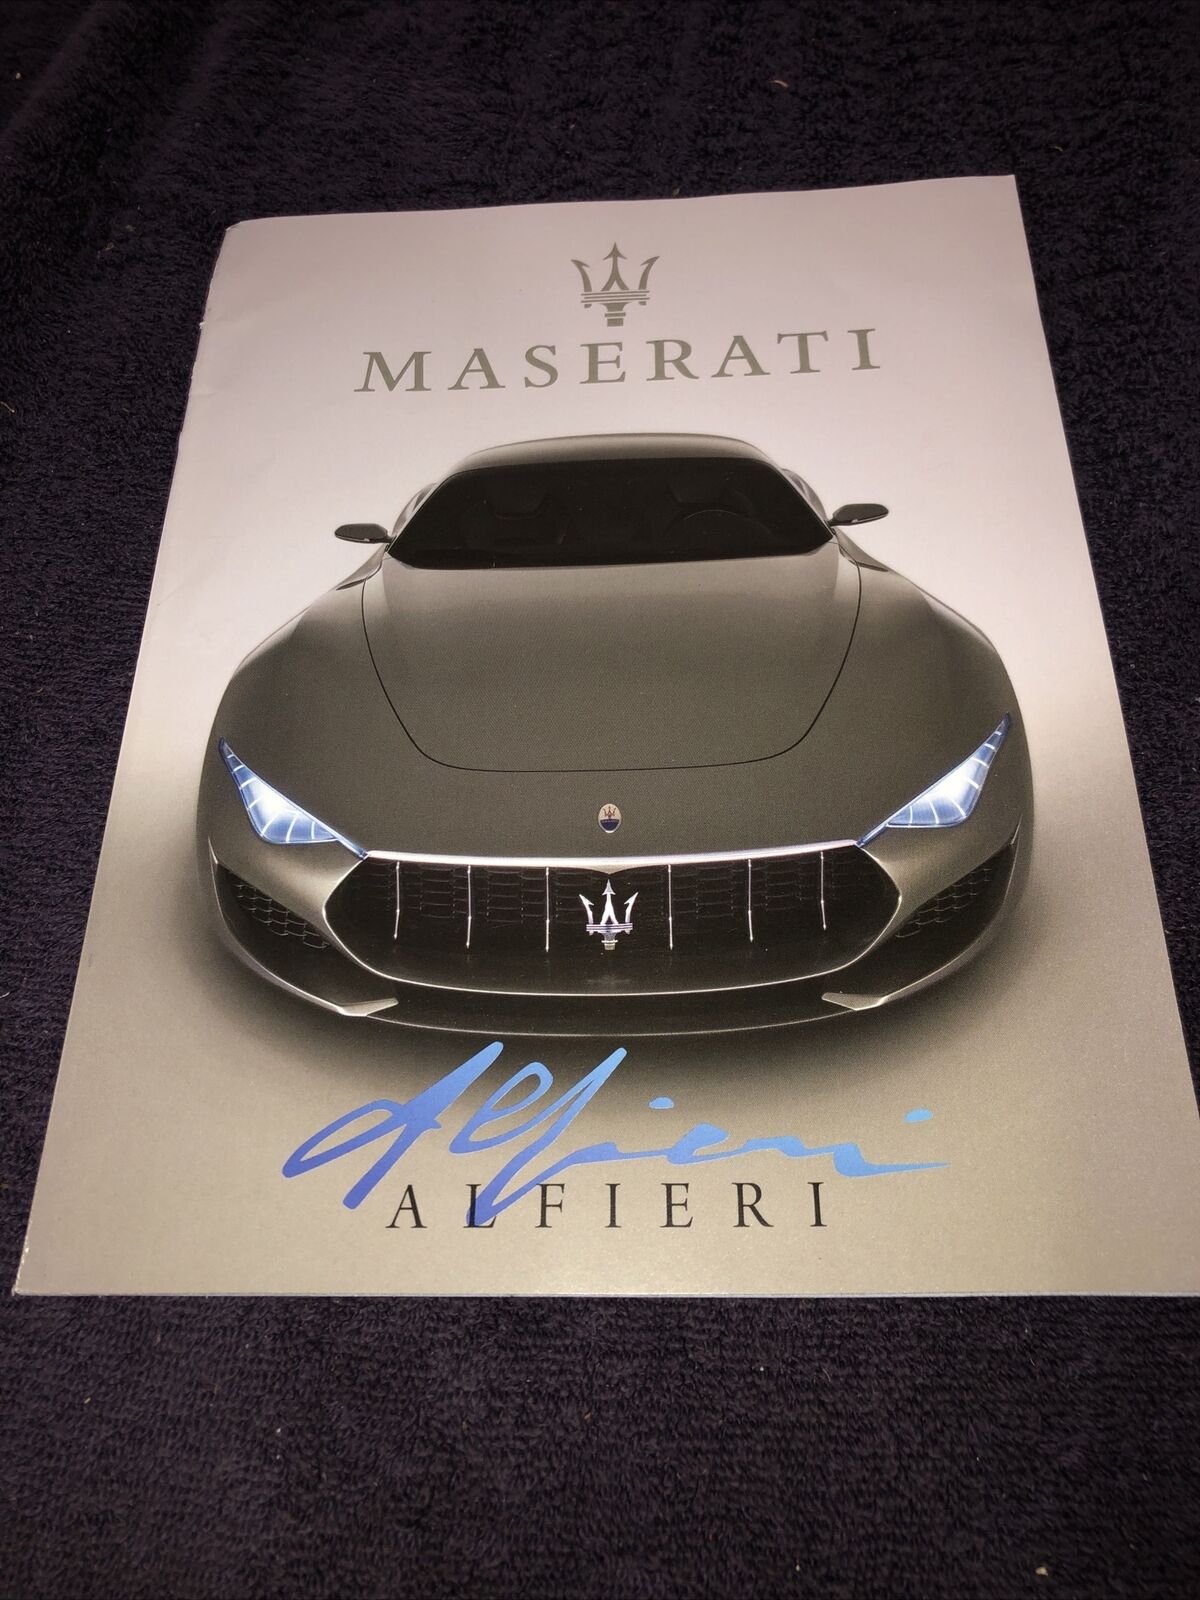 2014 Maserati Alfieri Concept Car 36-page Original Brochure - by AutoWeek